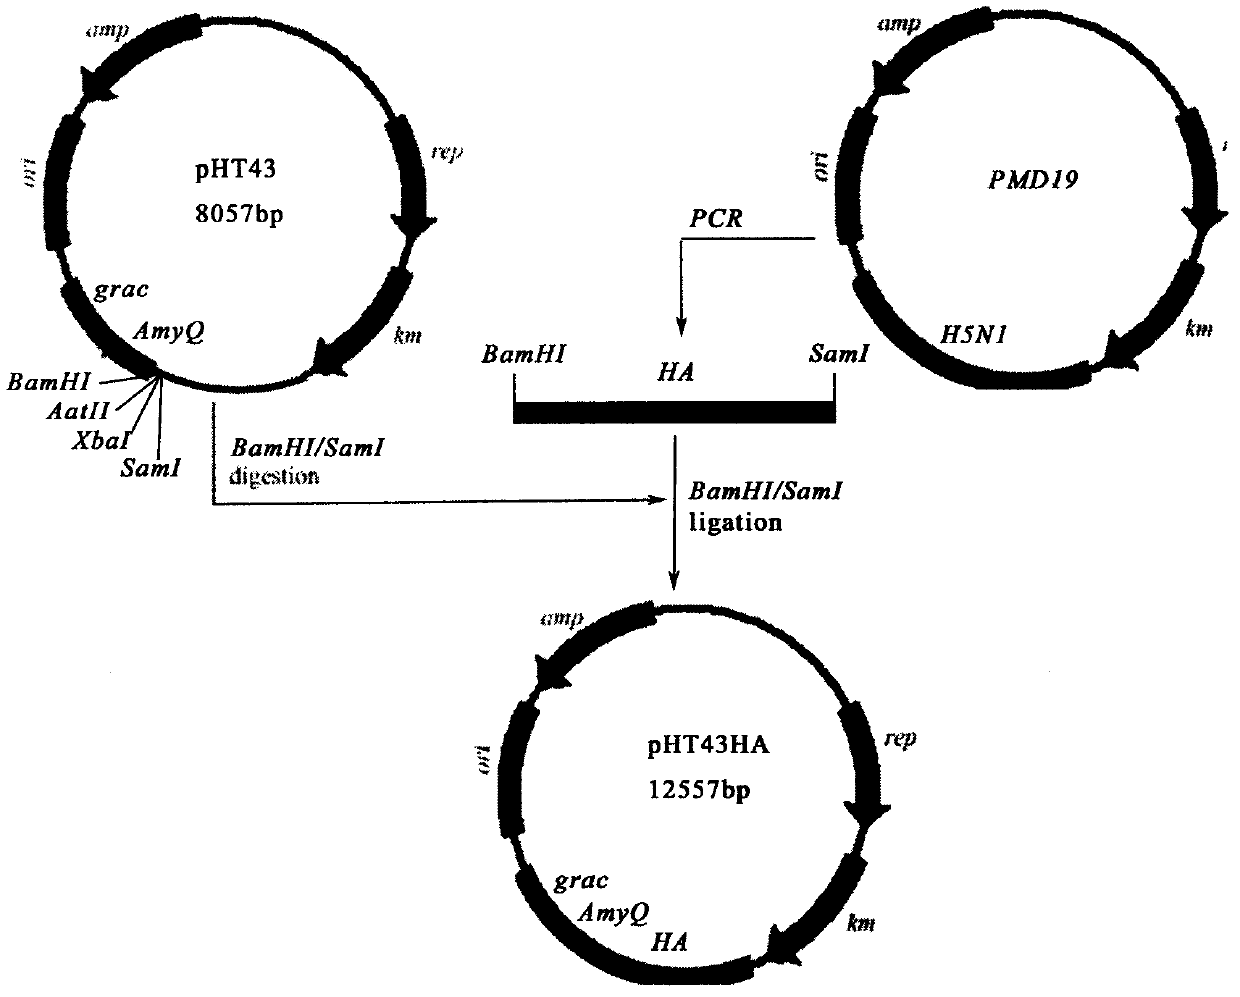 Recombinant Bacillus subtilis expressing highly pathogenic avian influenza h5n1 hemagglutinin ha protein